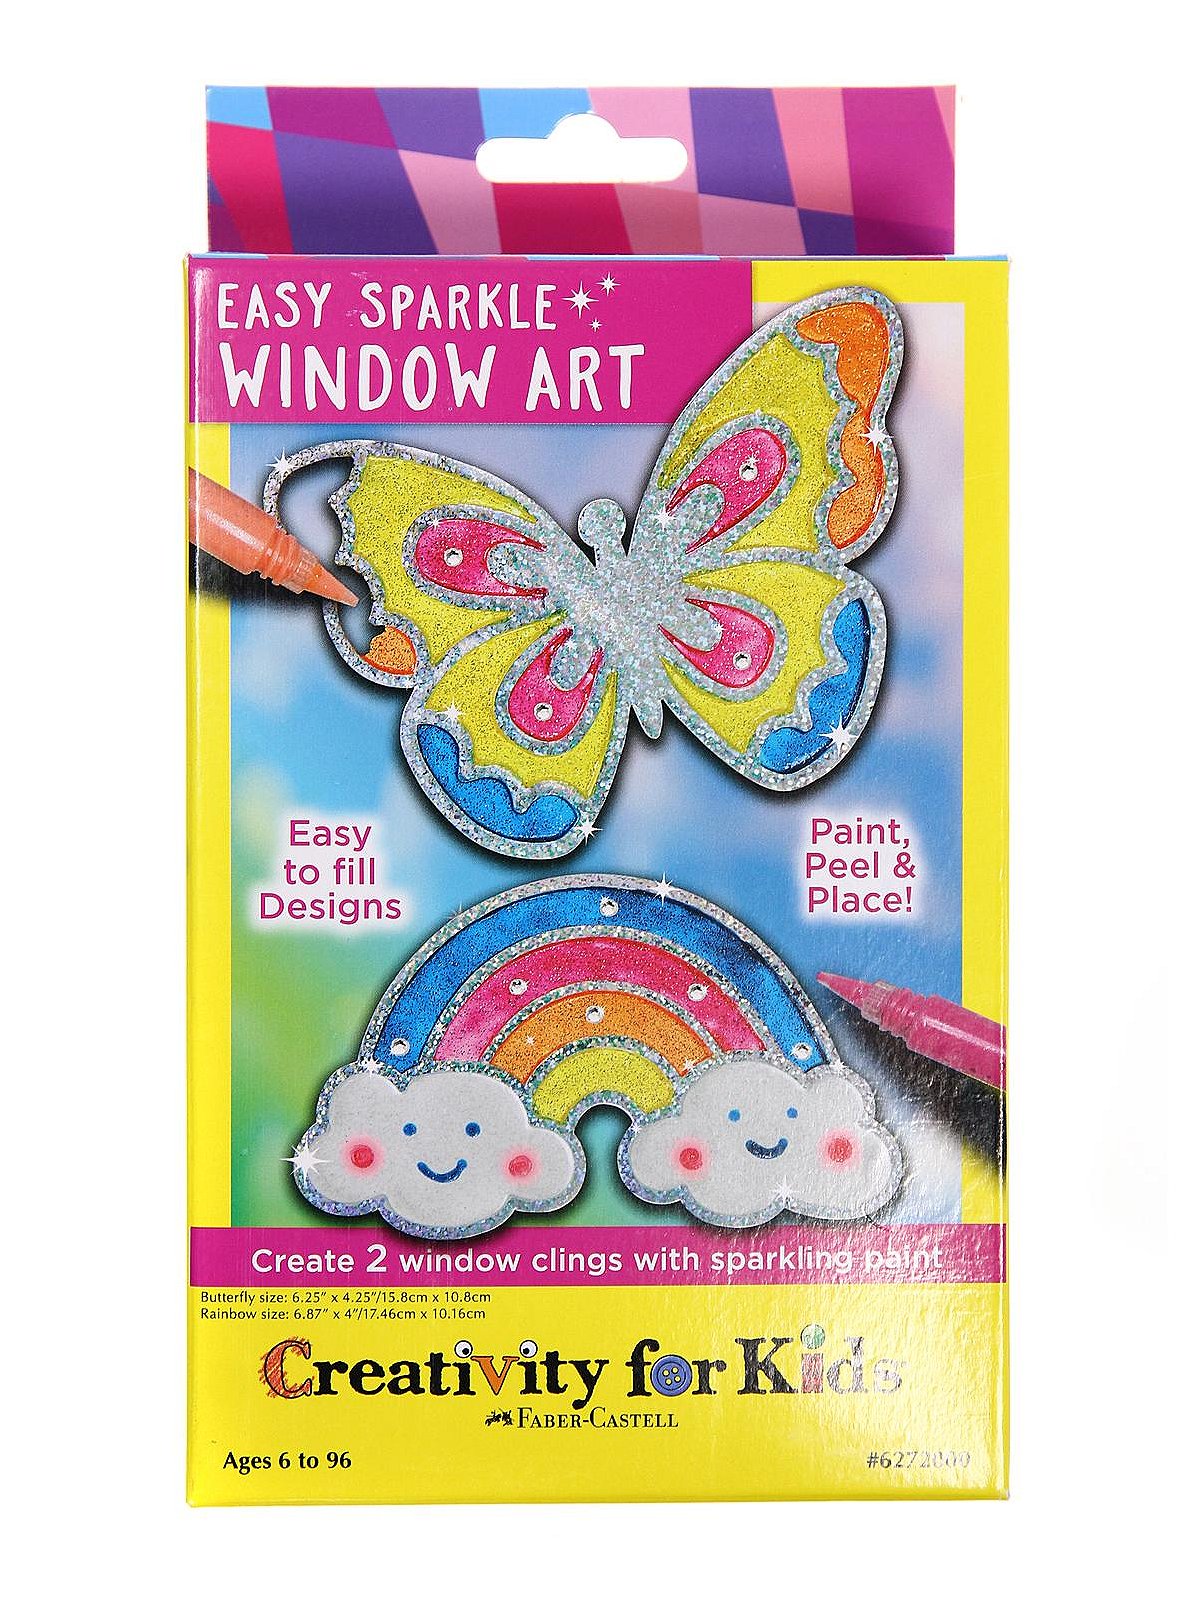 Creative Kids Sparkle Art Coloring Kit at Menards®